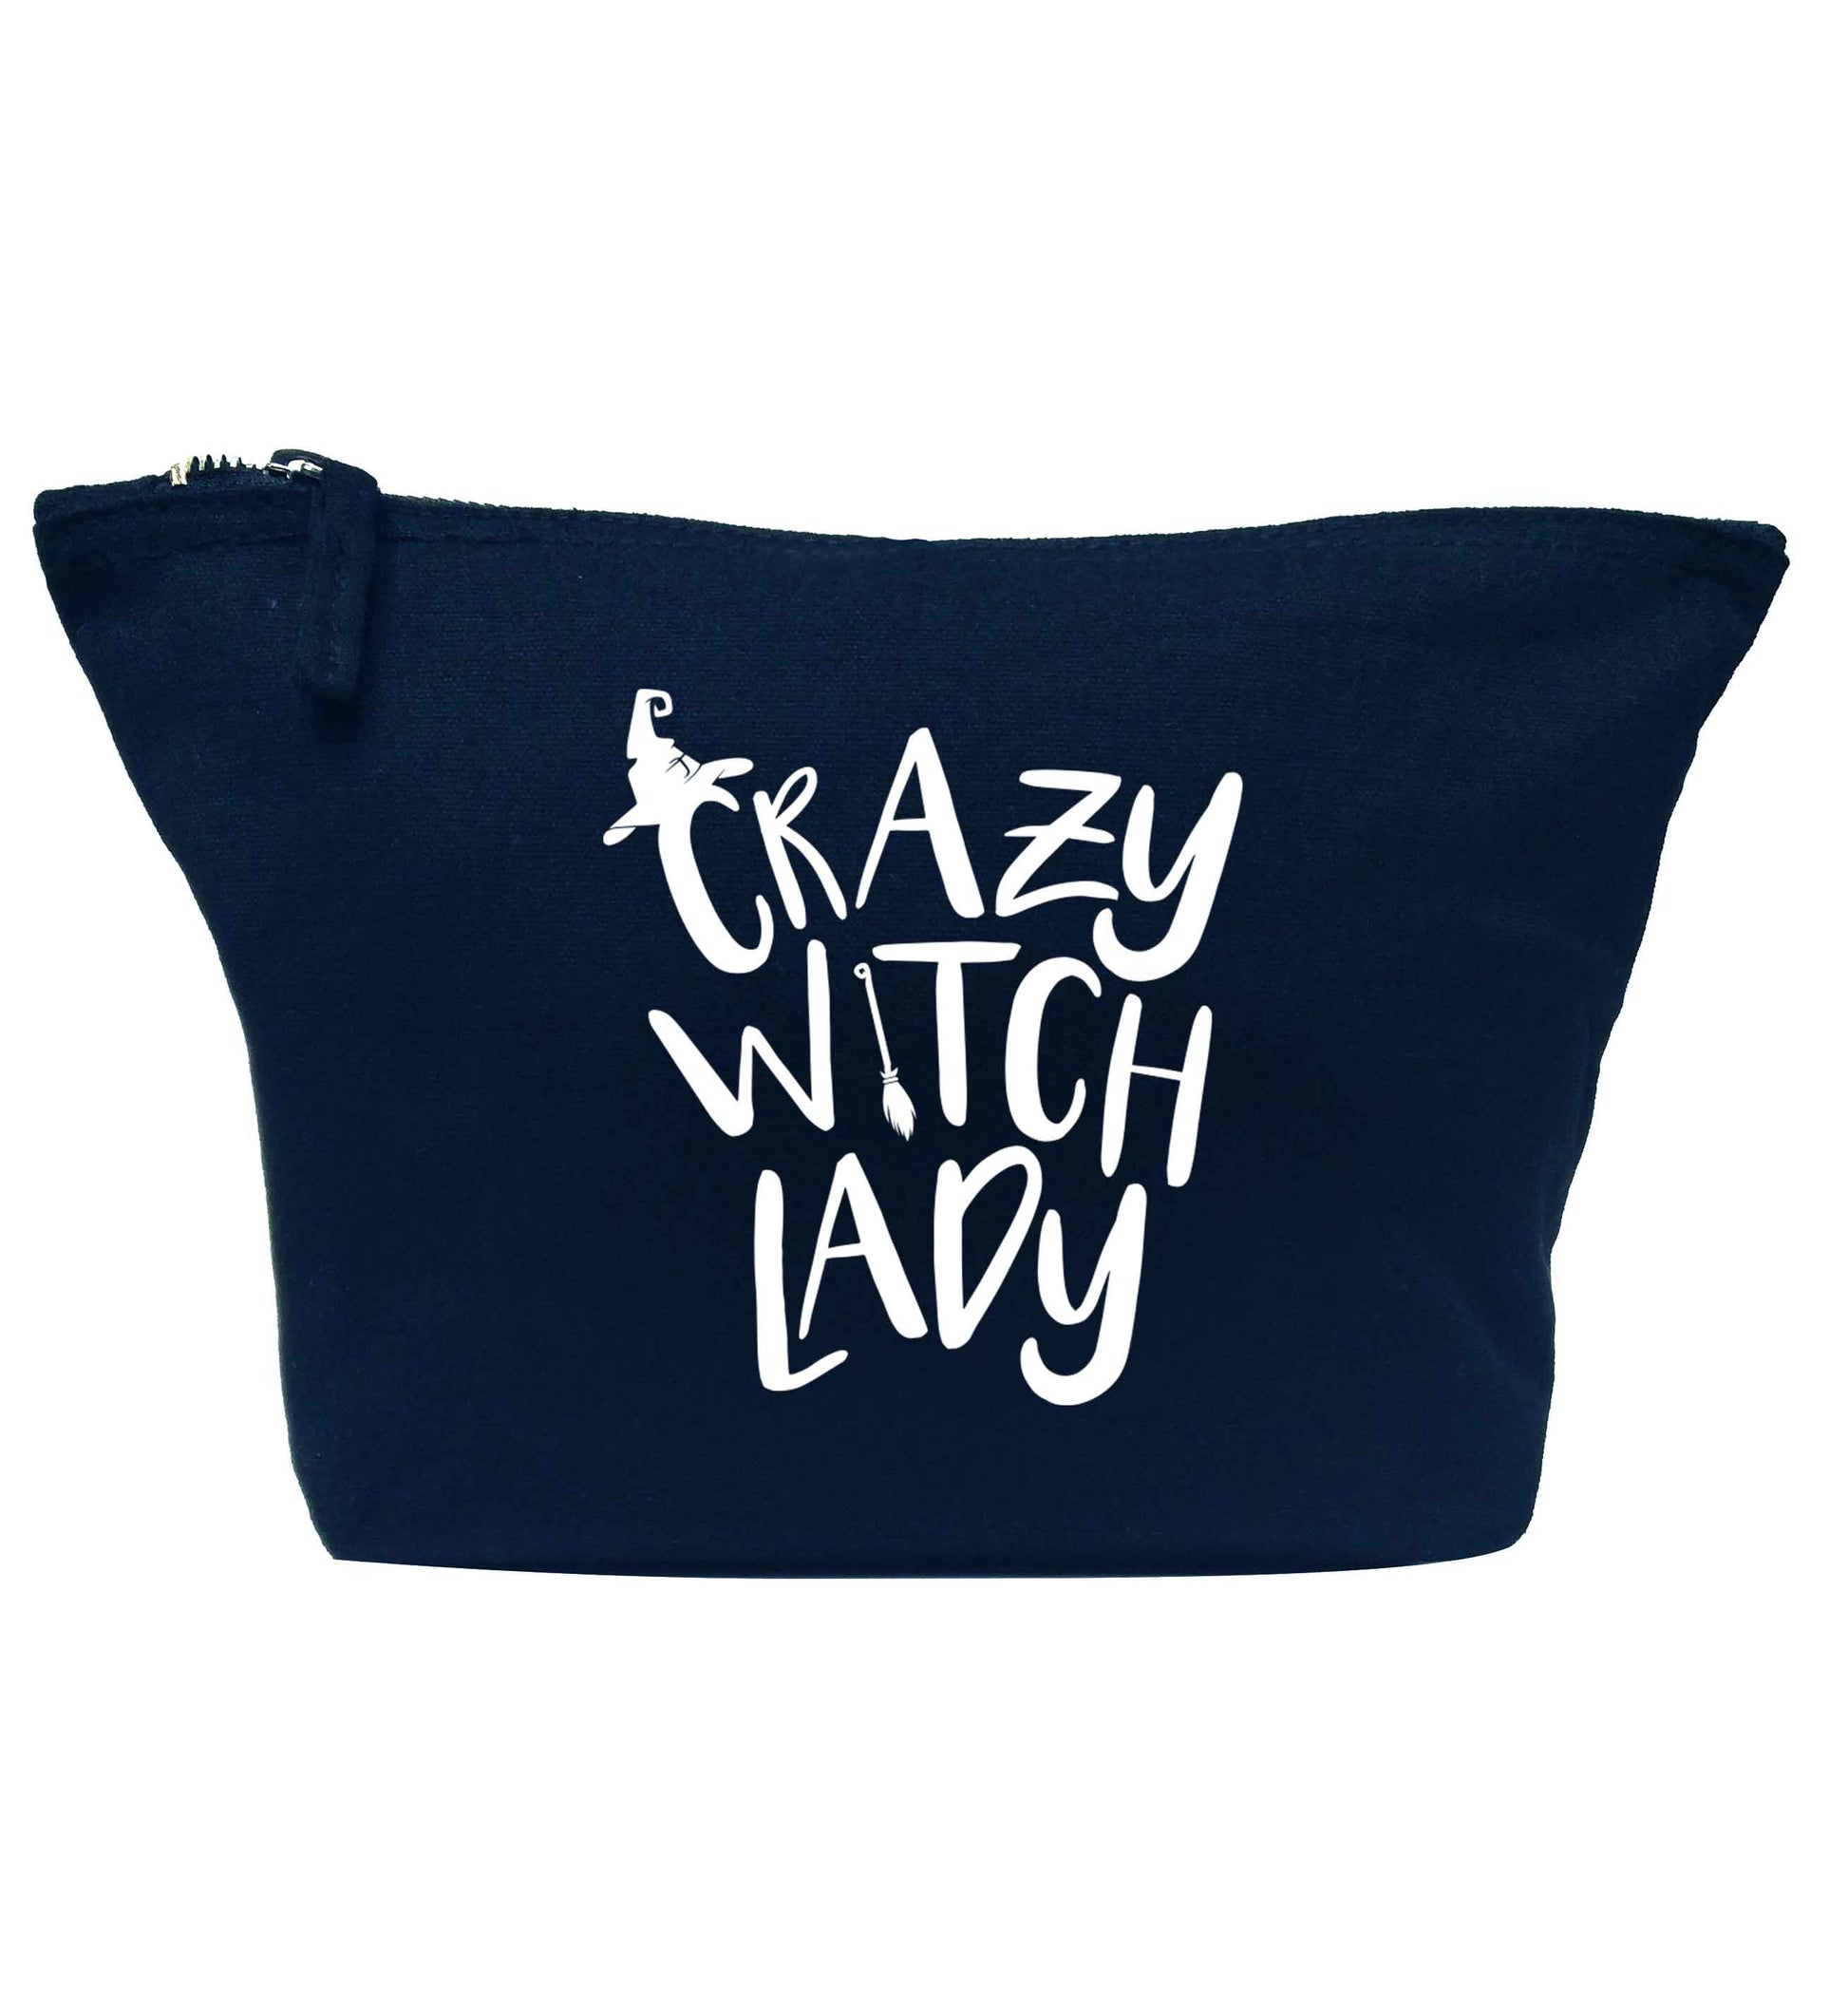 Crazy witch lady navy makeup bag